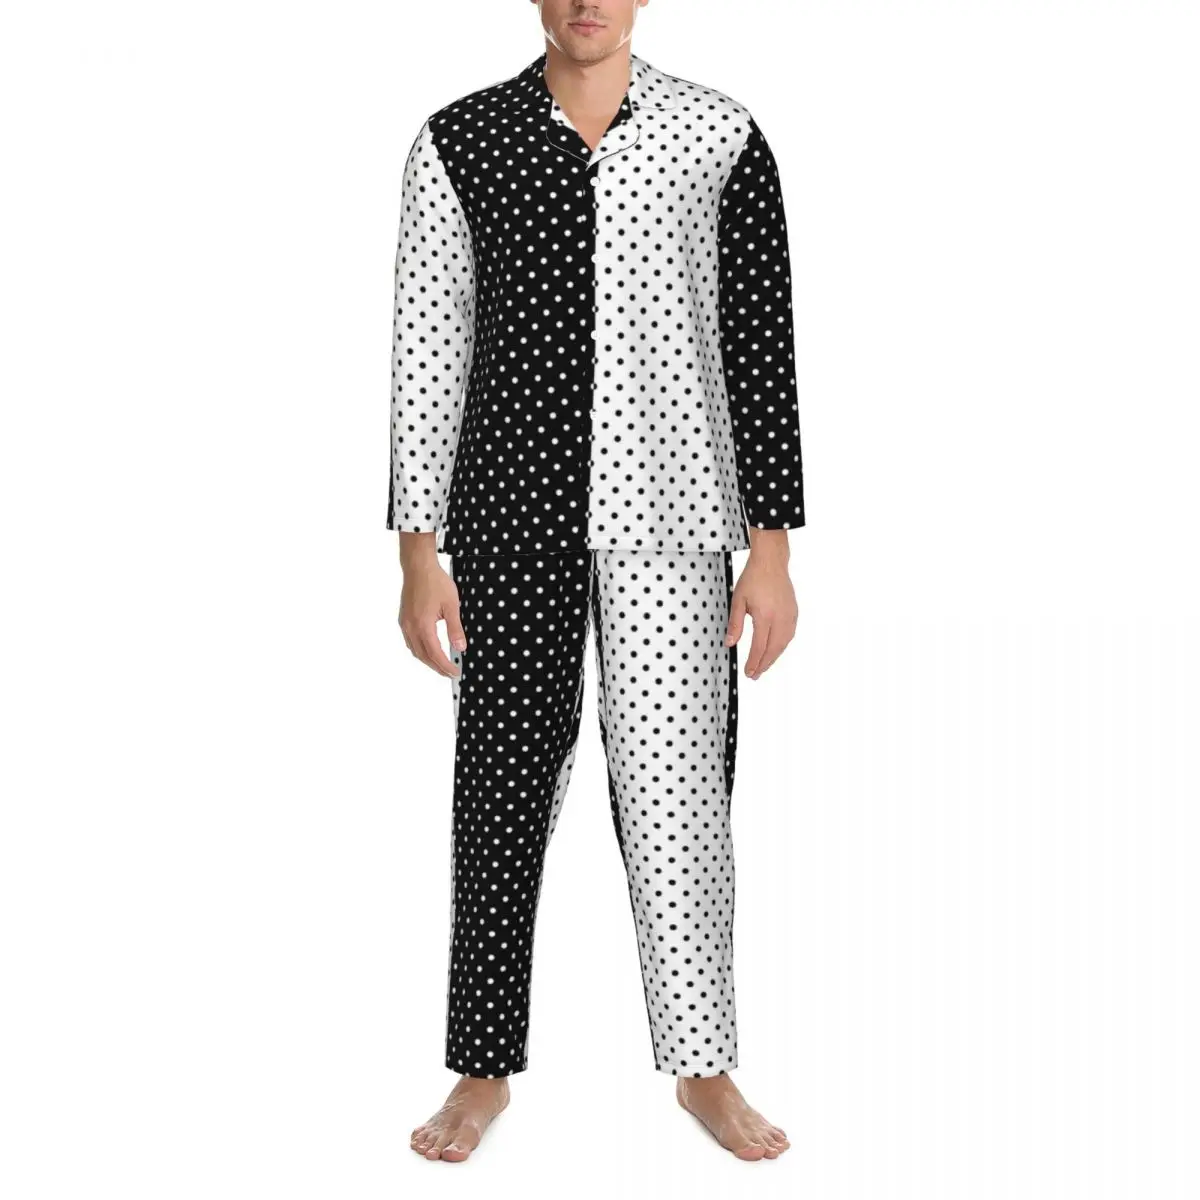 

Black And White Two Tone Pajama Sets Retro Polka Dot Romantic Sleepwear Man Long Sleeve Casual Loose Daily 2 Pieces Nightwear